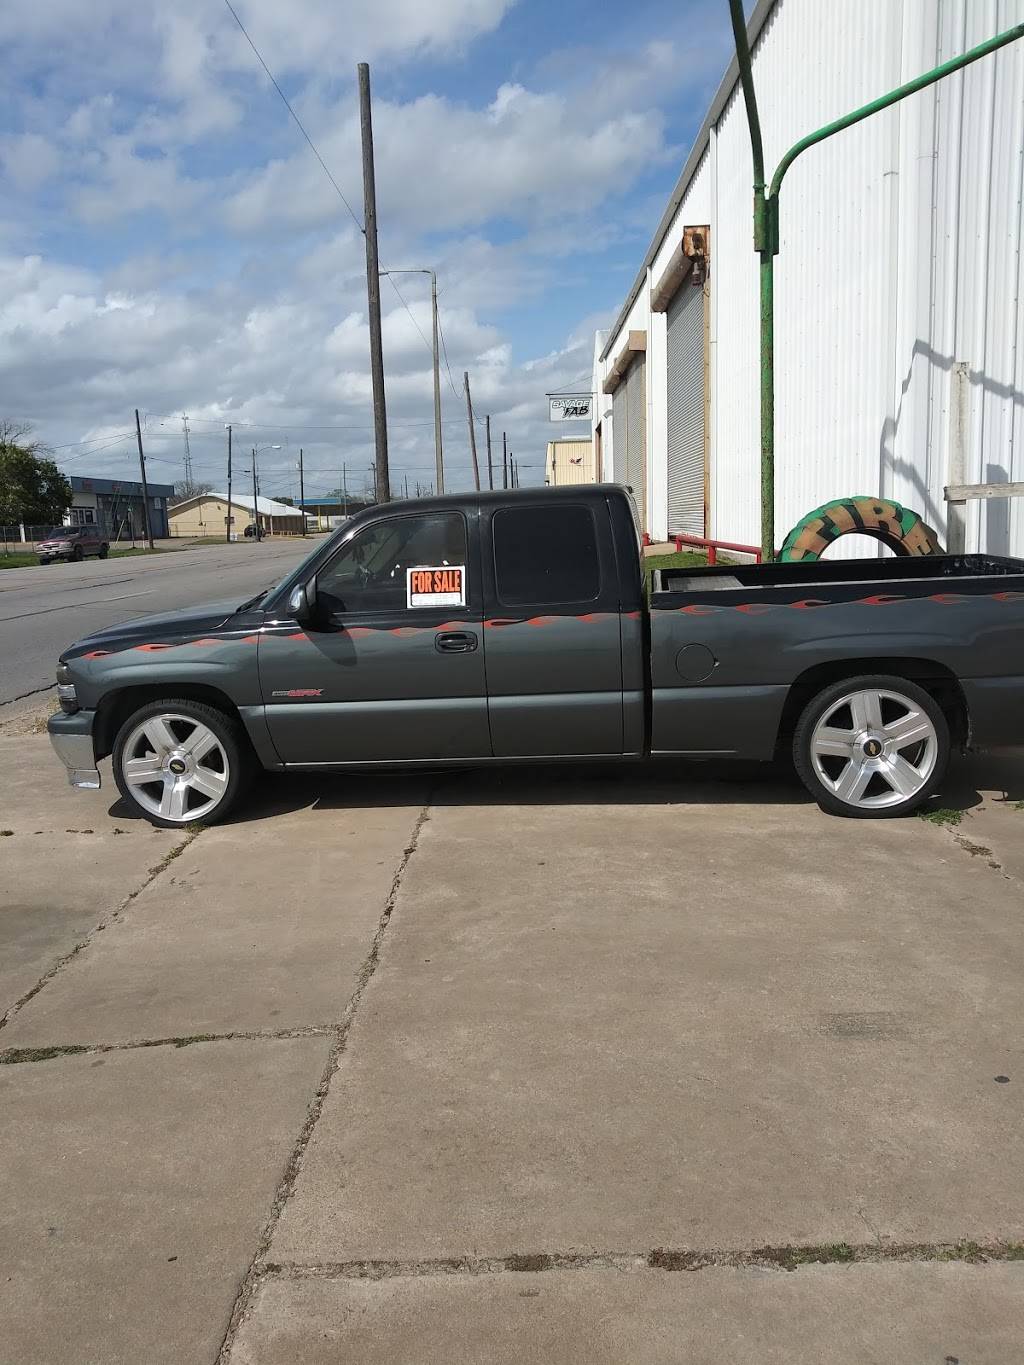 Rodriguez Tire Shop | Photo 3 of 3 | Address: 1701-1799 12th St, Bay City, TX 77414, USA | Phone: (979) 330-7341